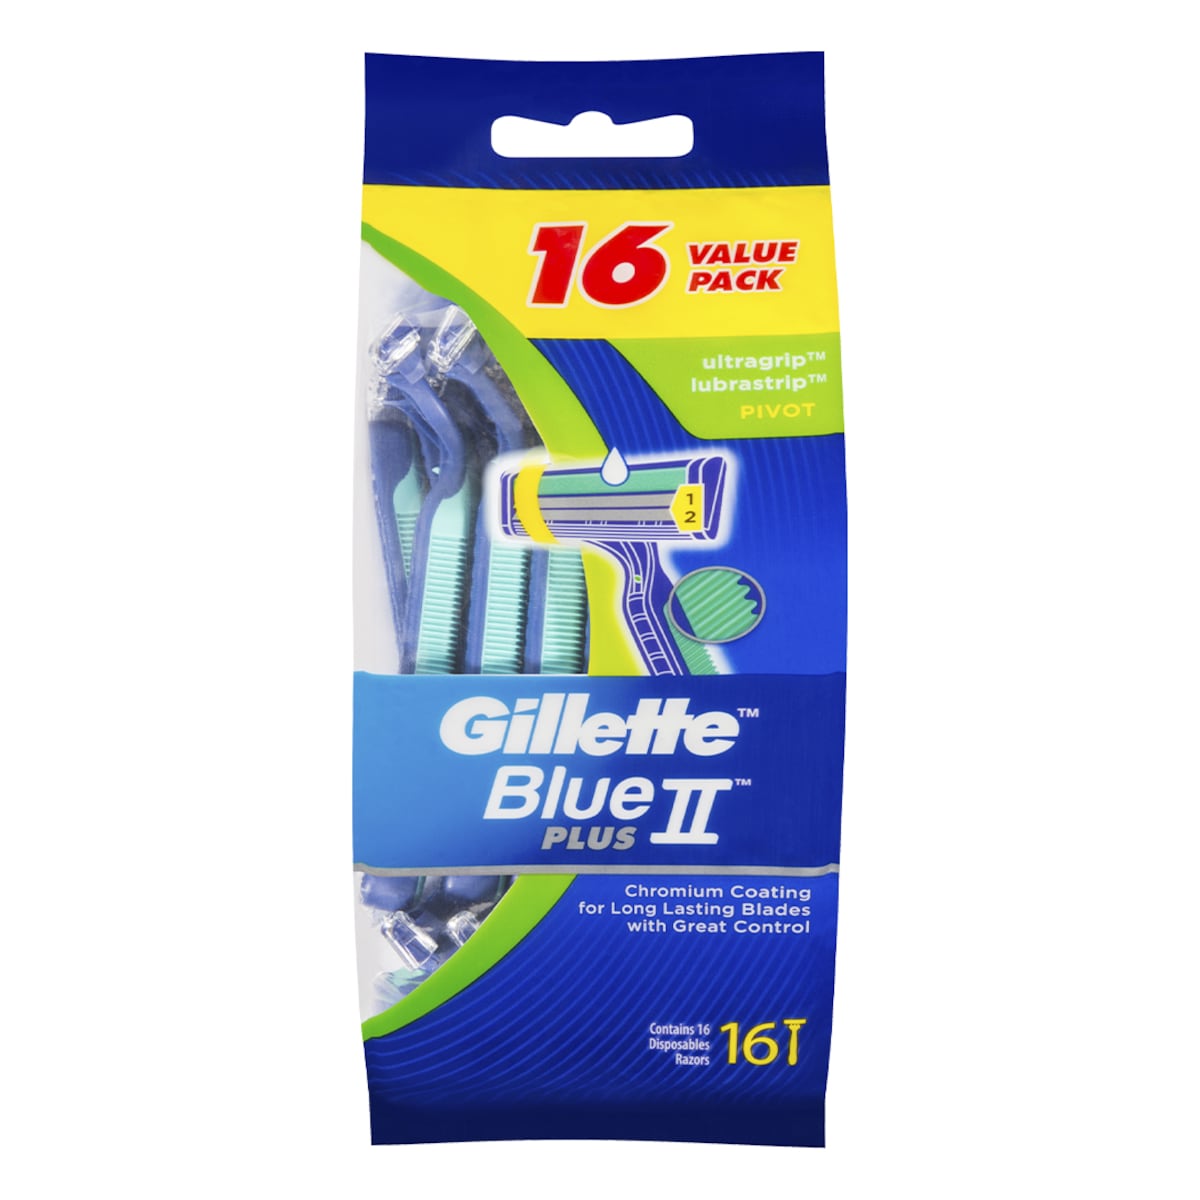 Gillette BlueII Plus UltraGrip Pivot Disposable Razors 16 Pack